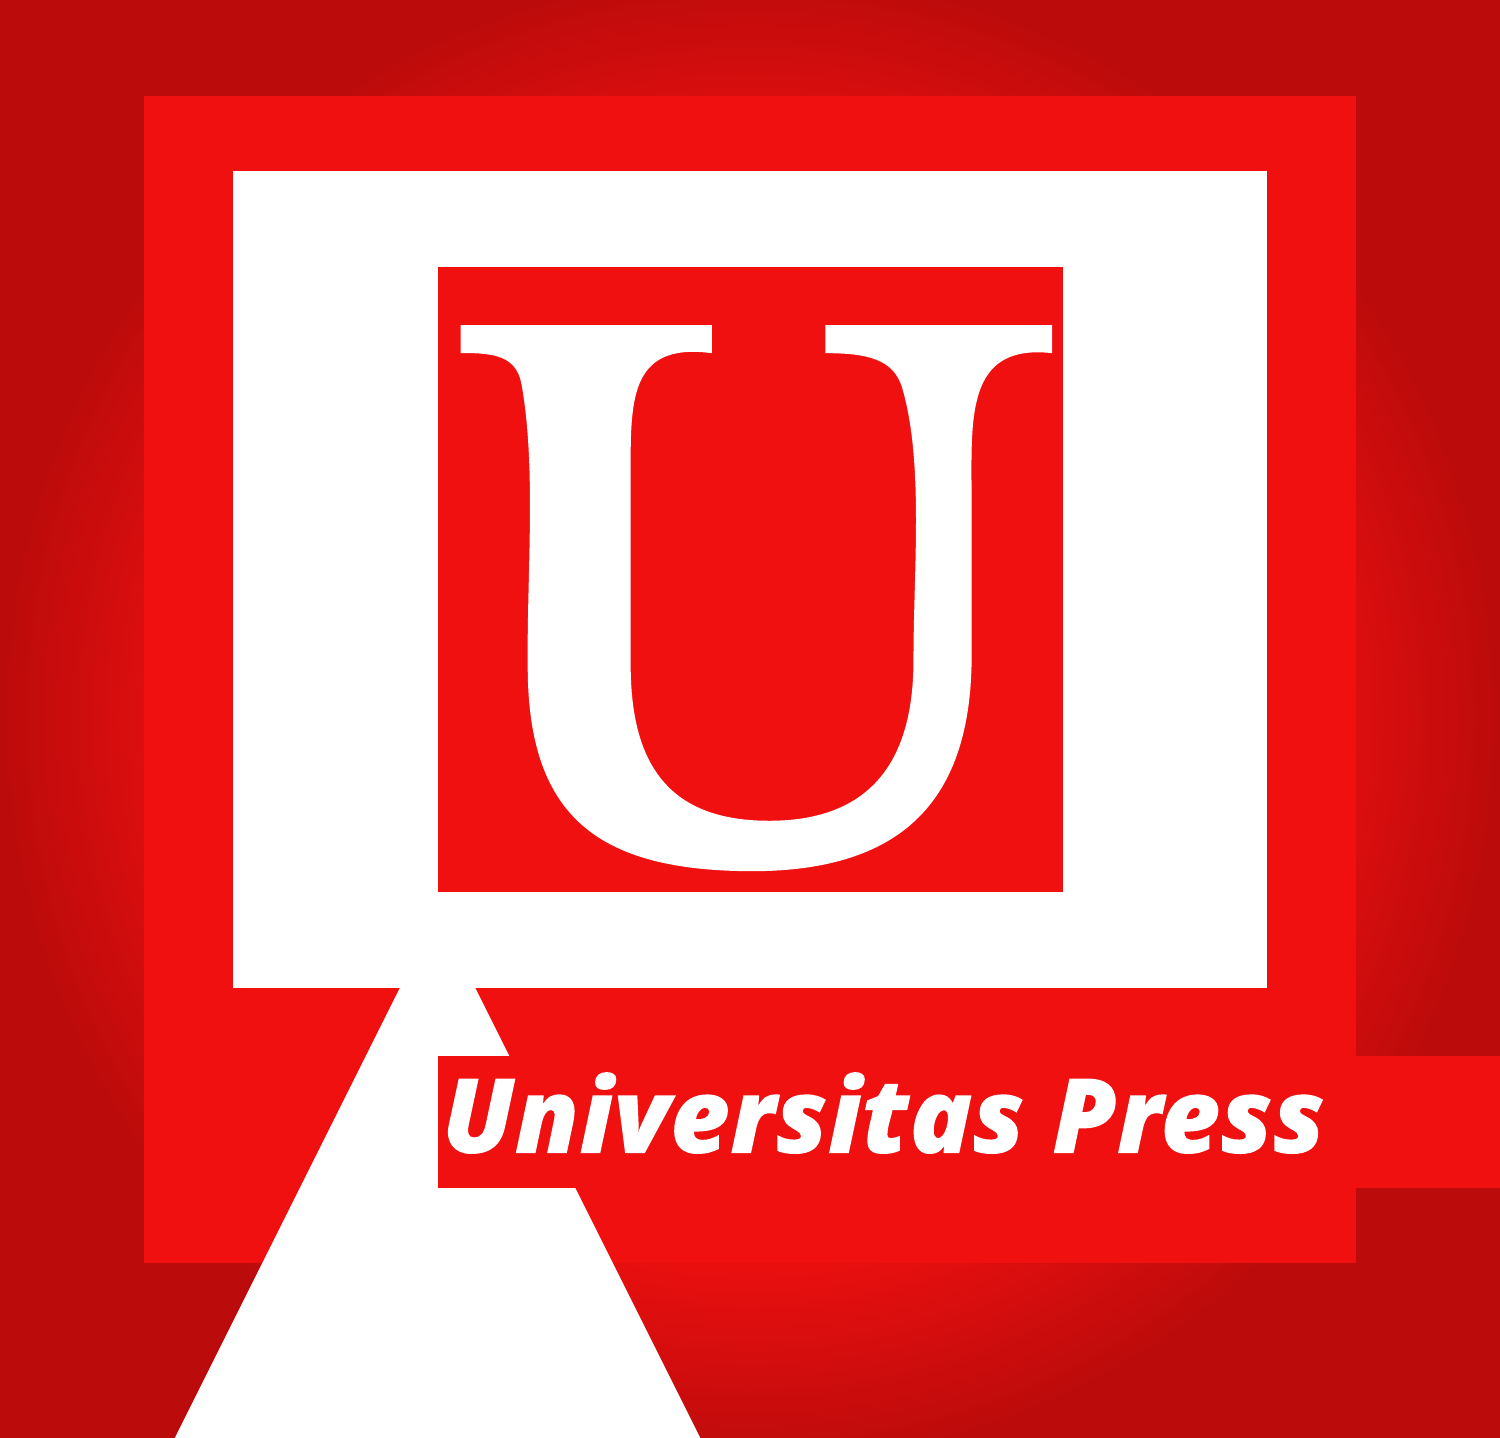 Universitas Press logo